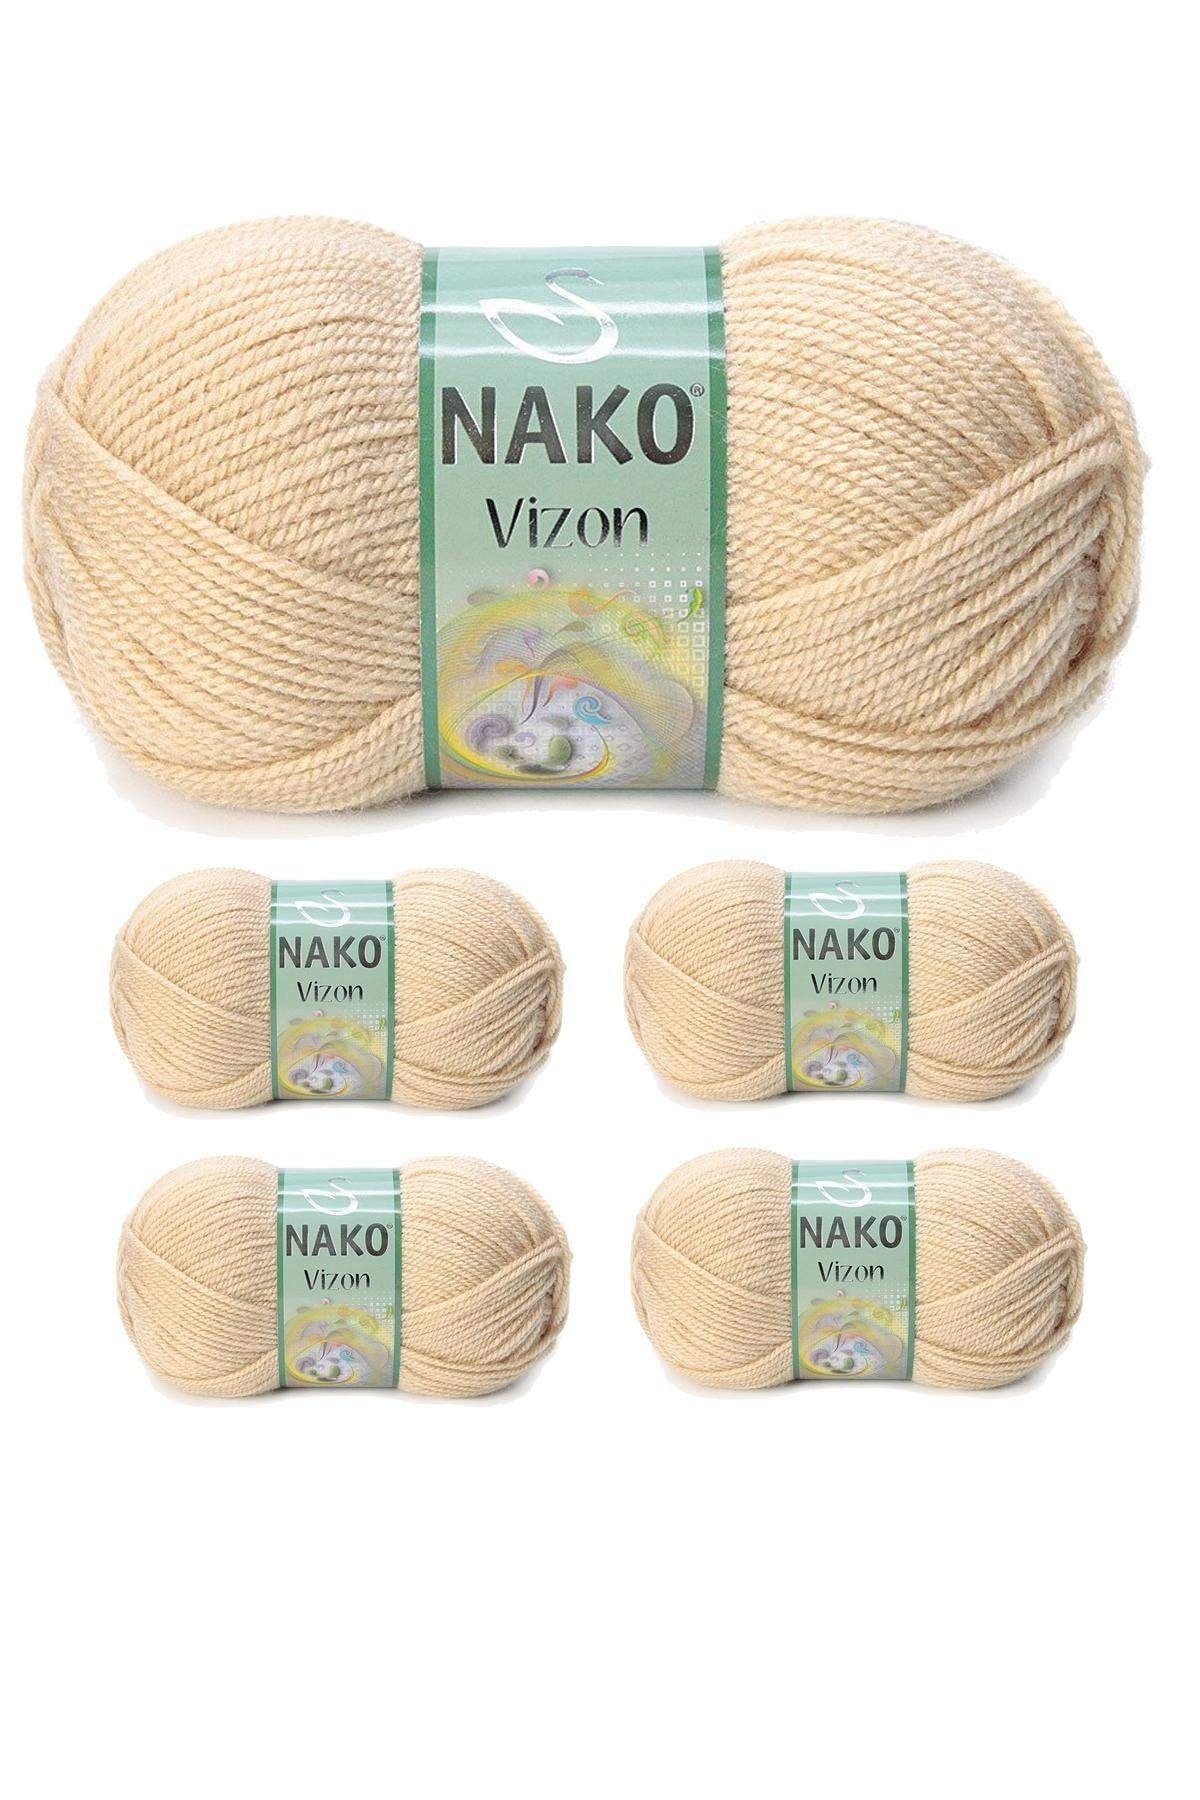 Nako 5 Adet Vizon Premium Akrilik El Örgü Ipi Yünü Renk No:219 Deve Tüyü